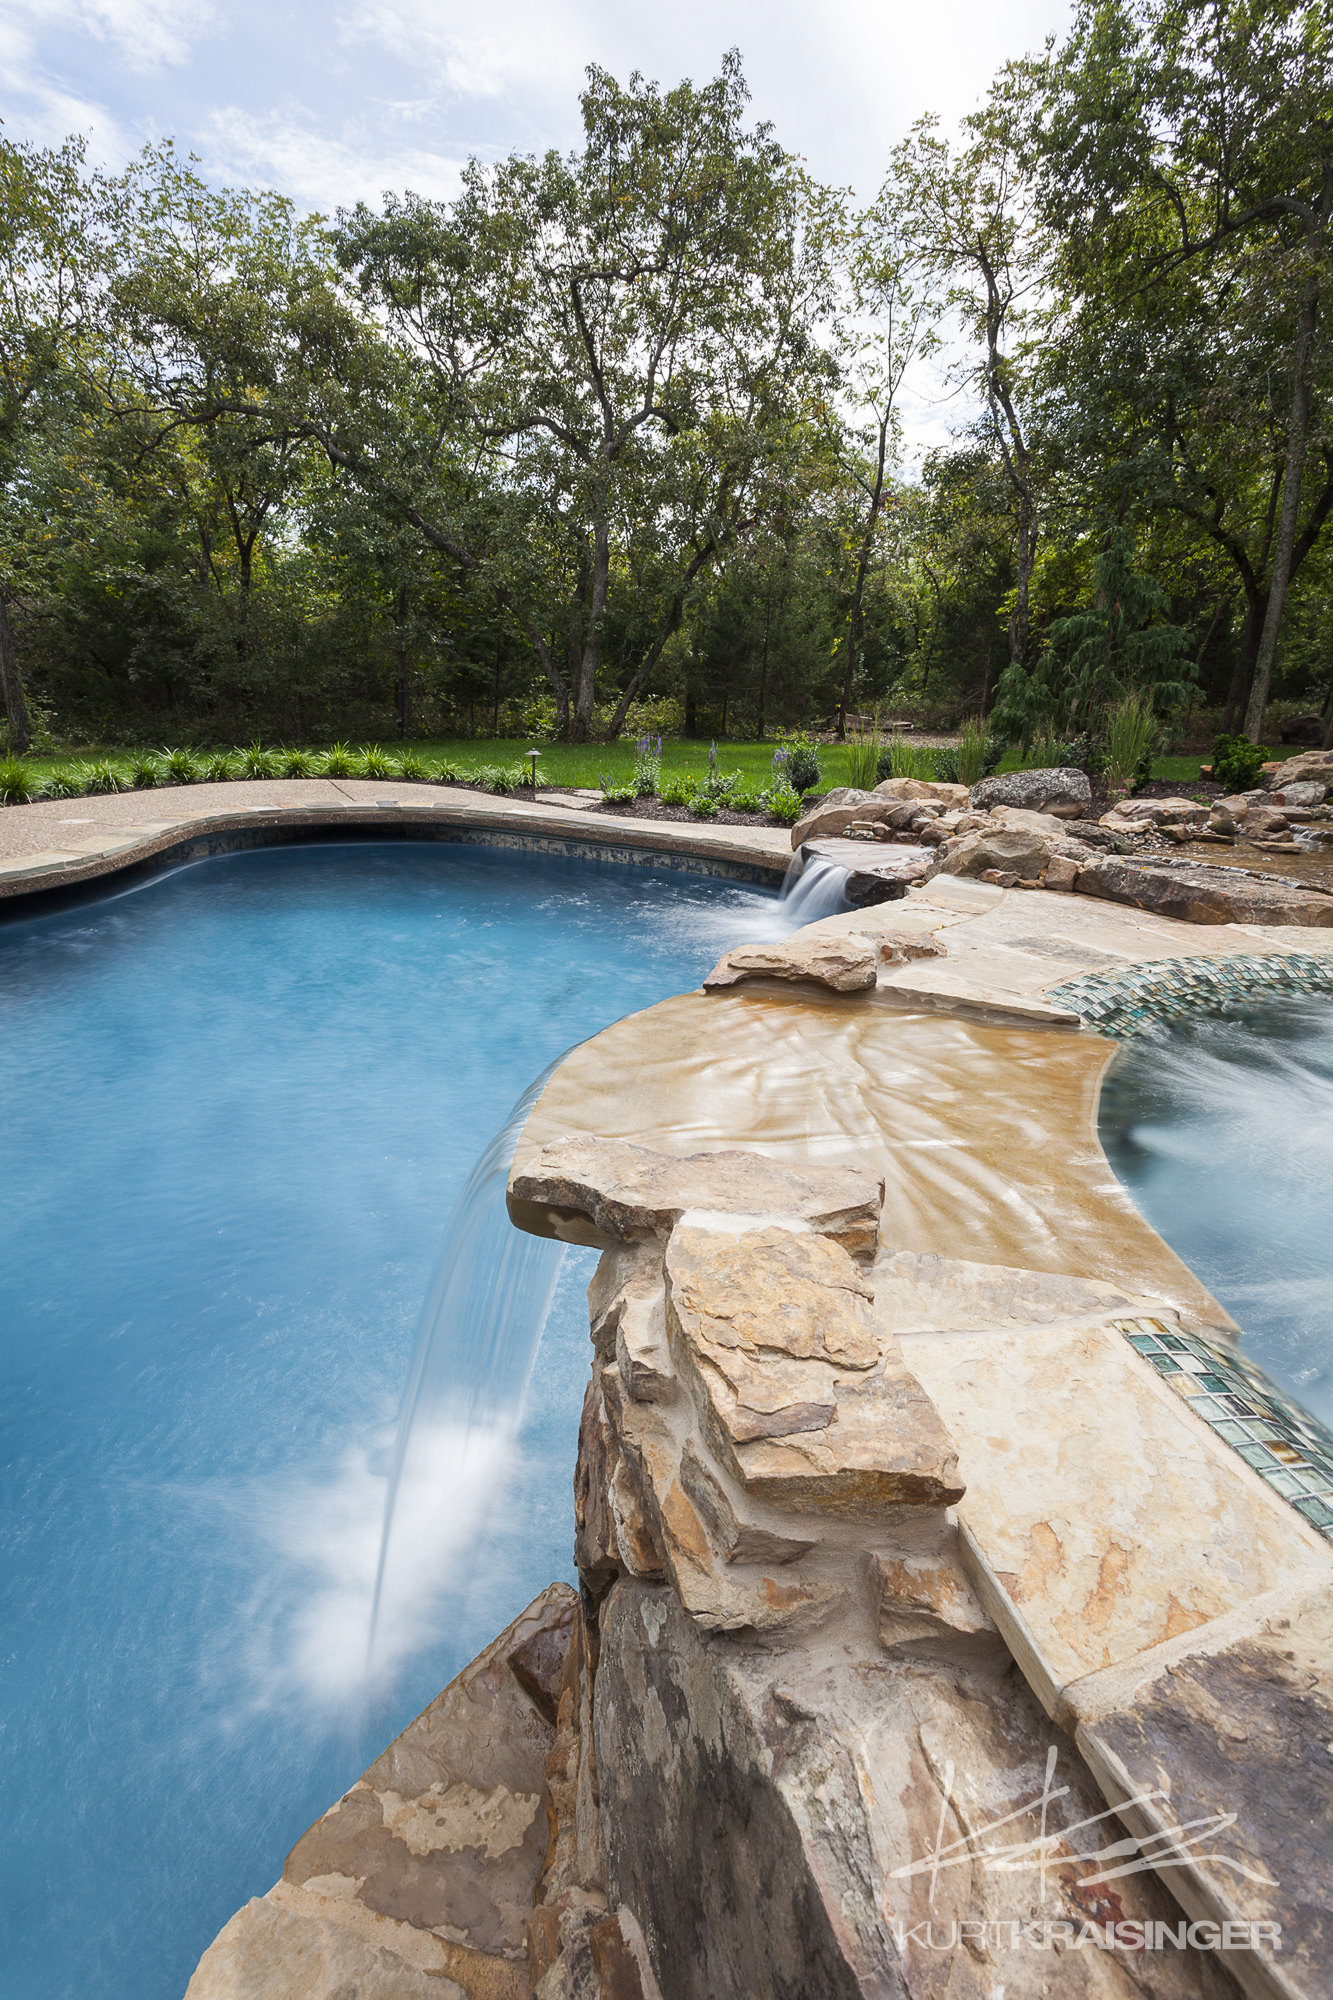 kurt kraisinger founder tributary luxury custom pools watershapes rockwood falls